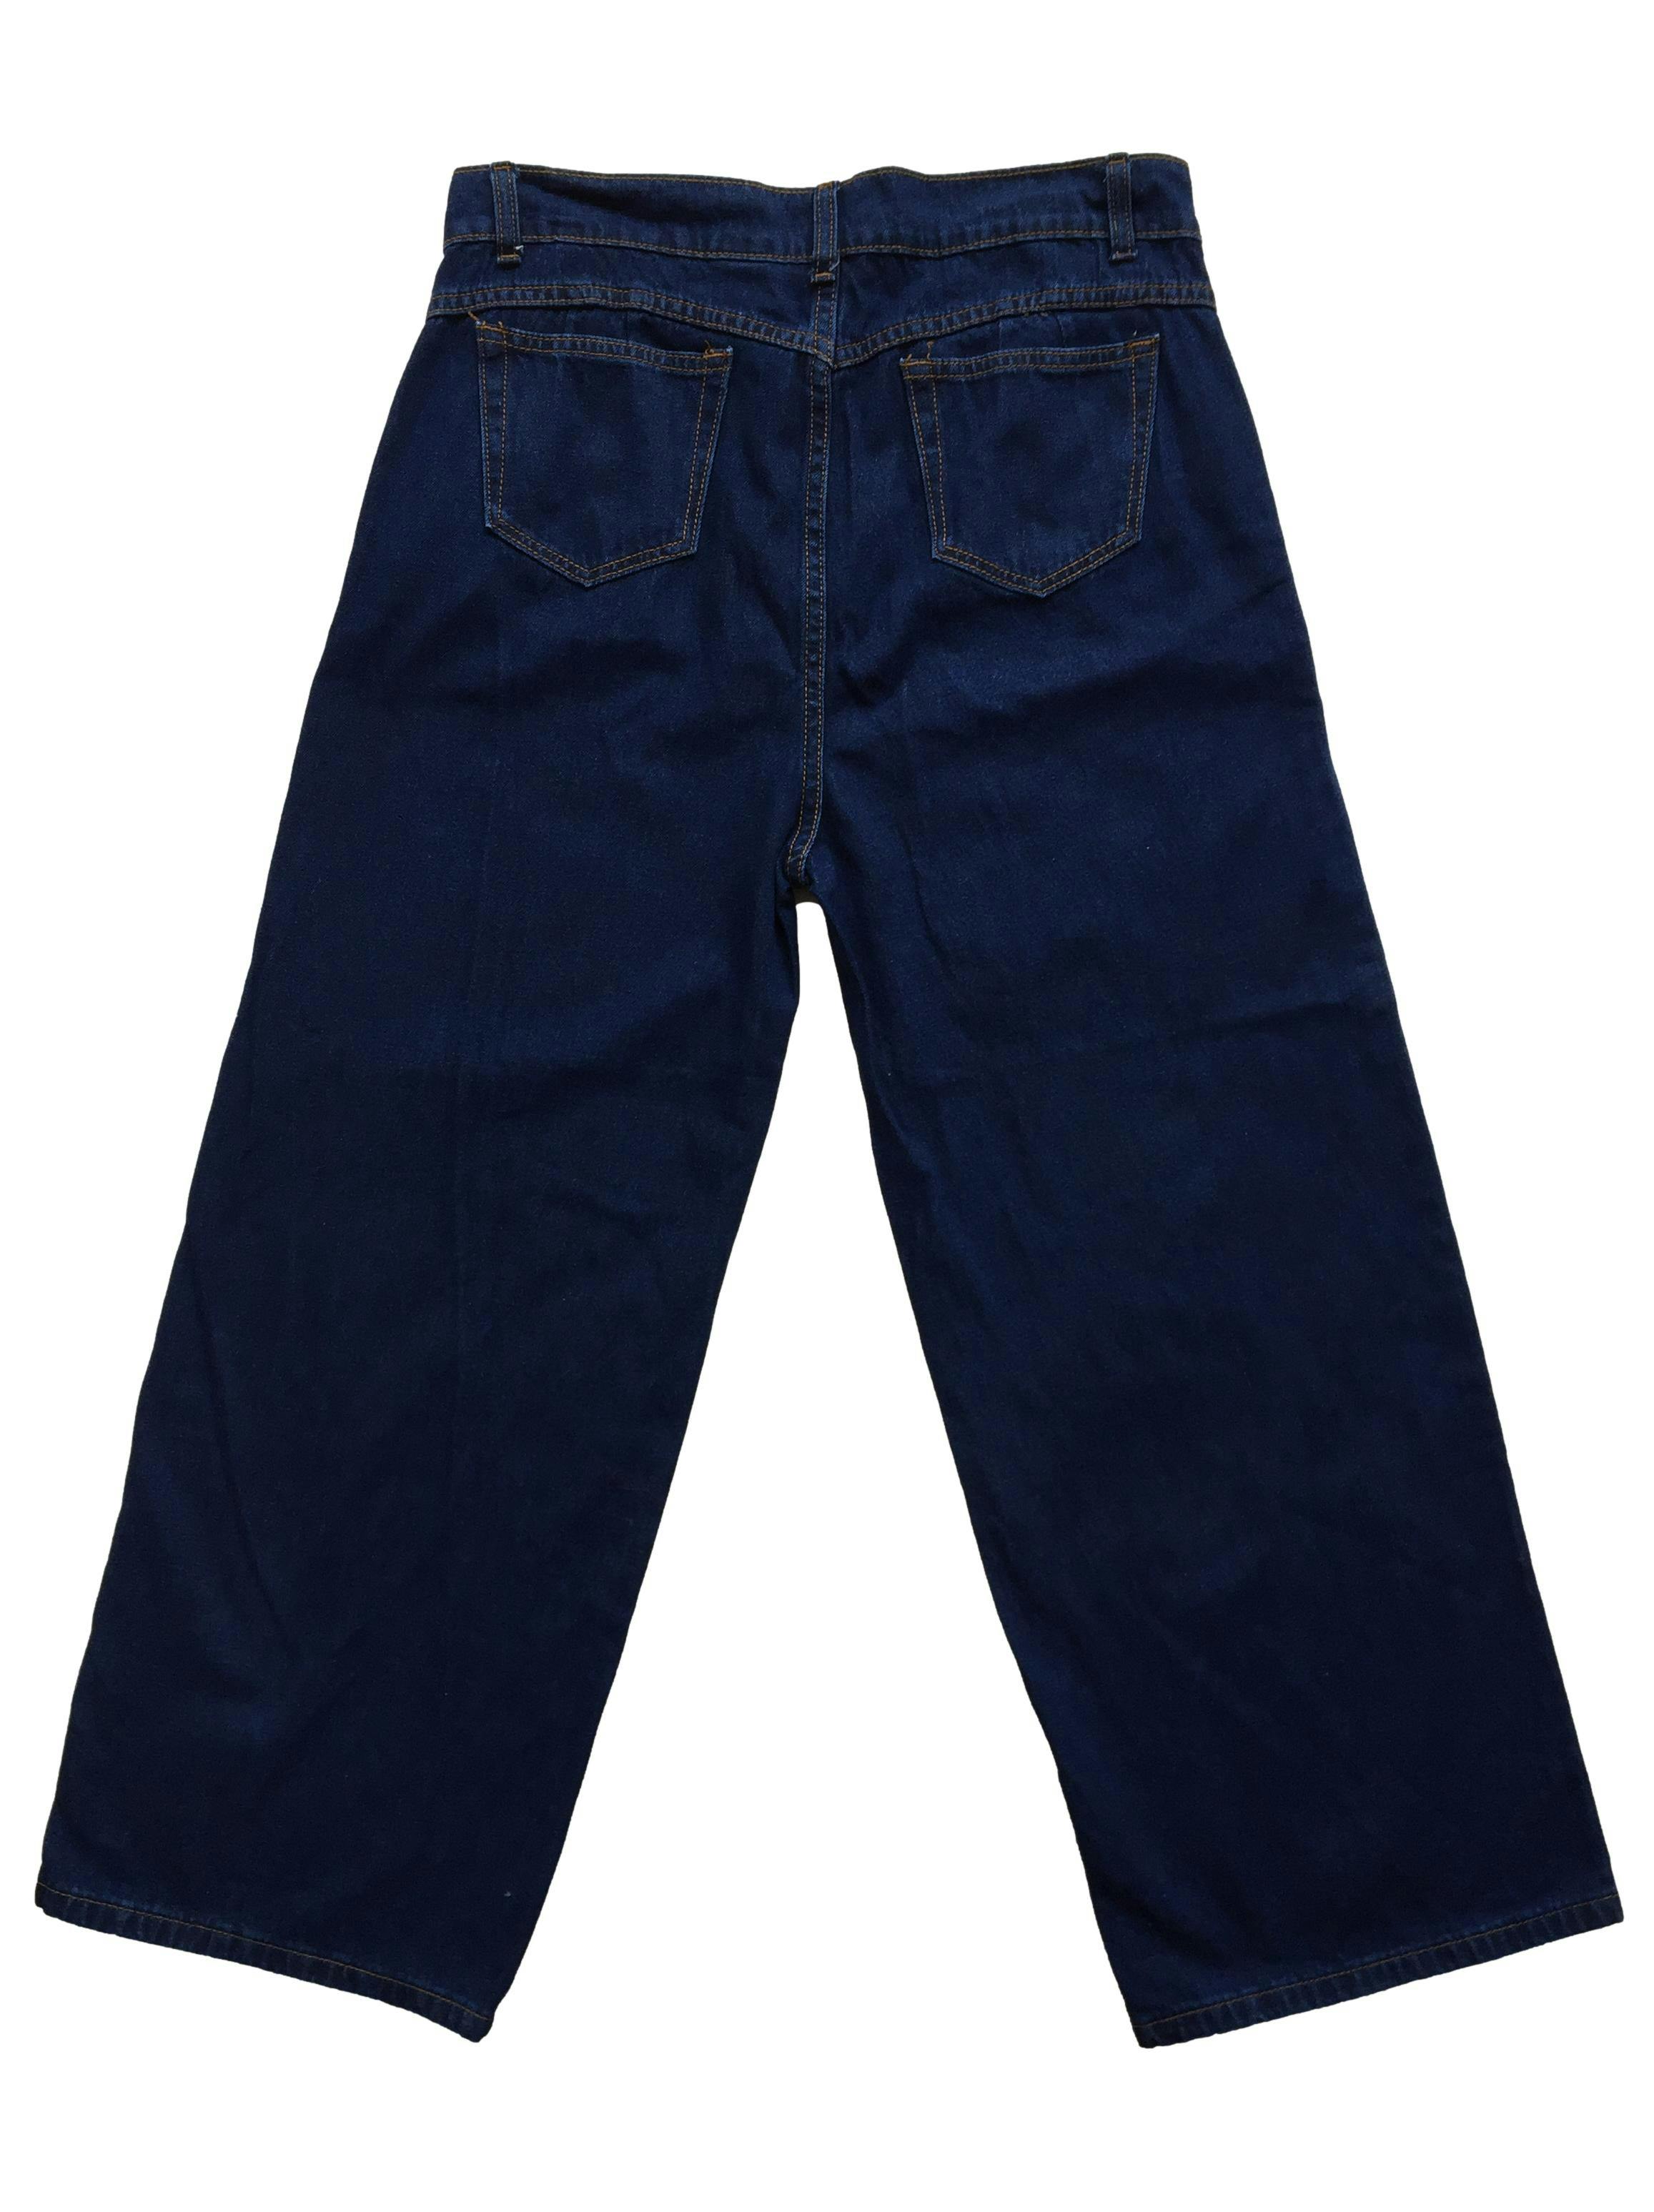 Pantalón jean, pierna ancha, bolsillos y botón delanteros. Cintura: 80cm, Tiro: 30cm, Largo: 92cm